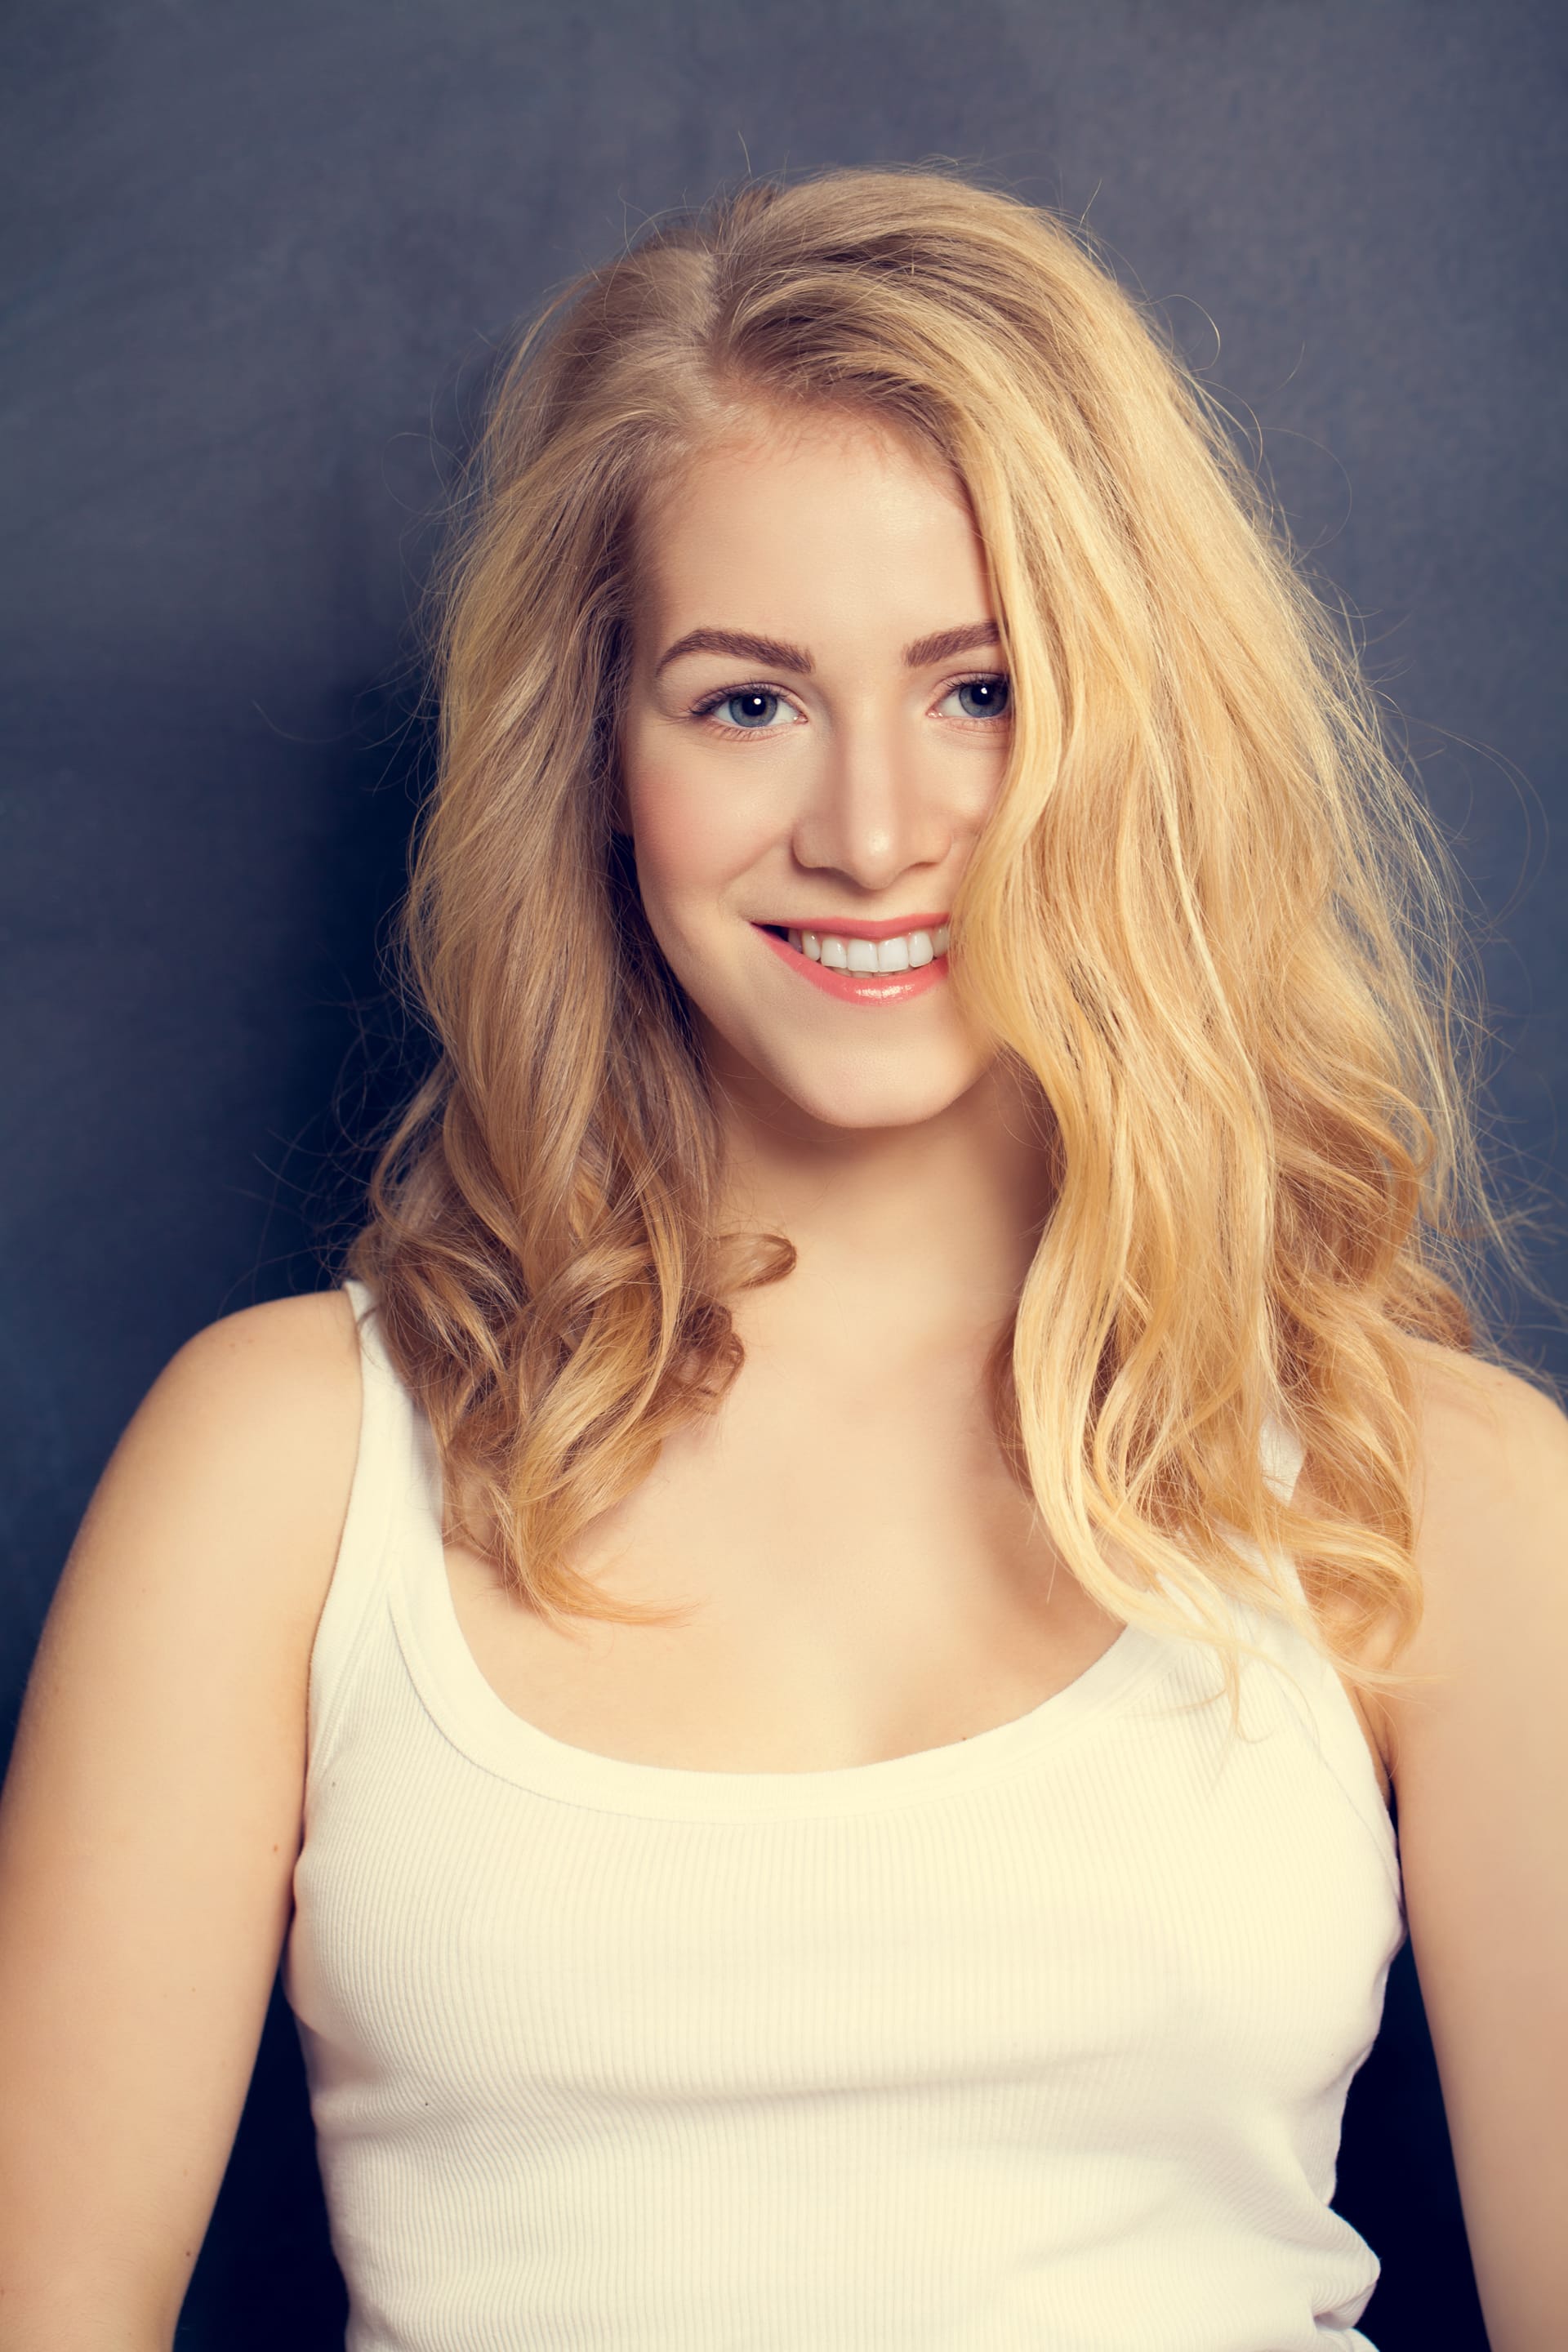 Smiling blonde woman dark background makeup curly hairs beautiful ladies photos